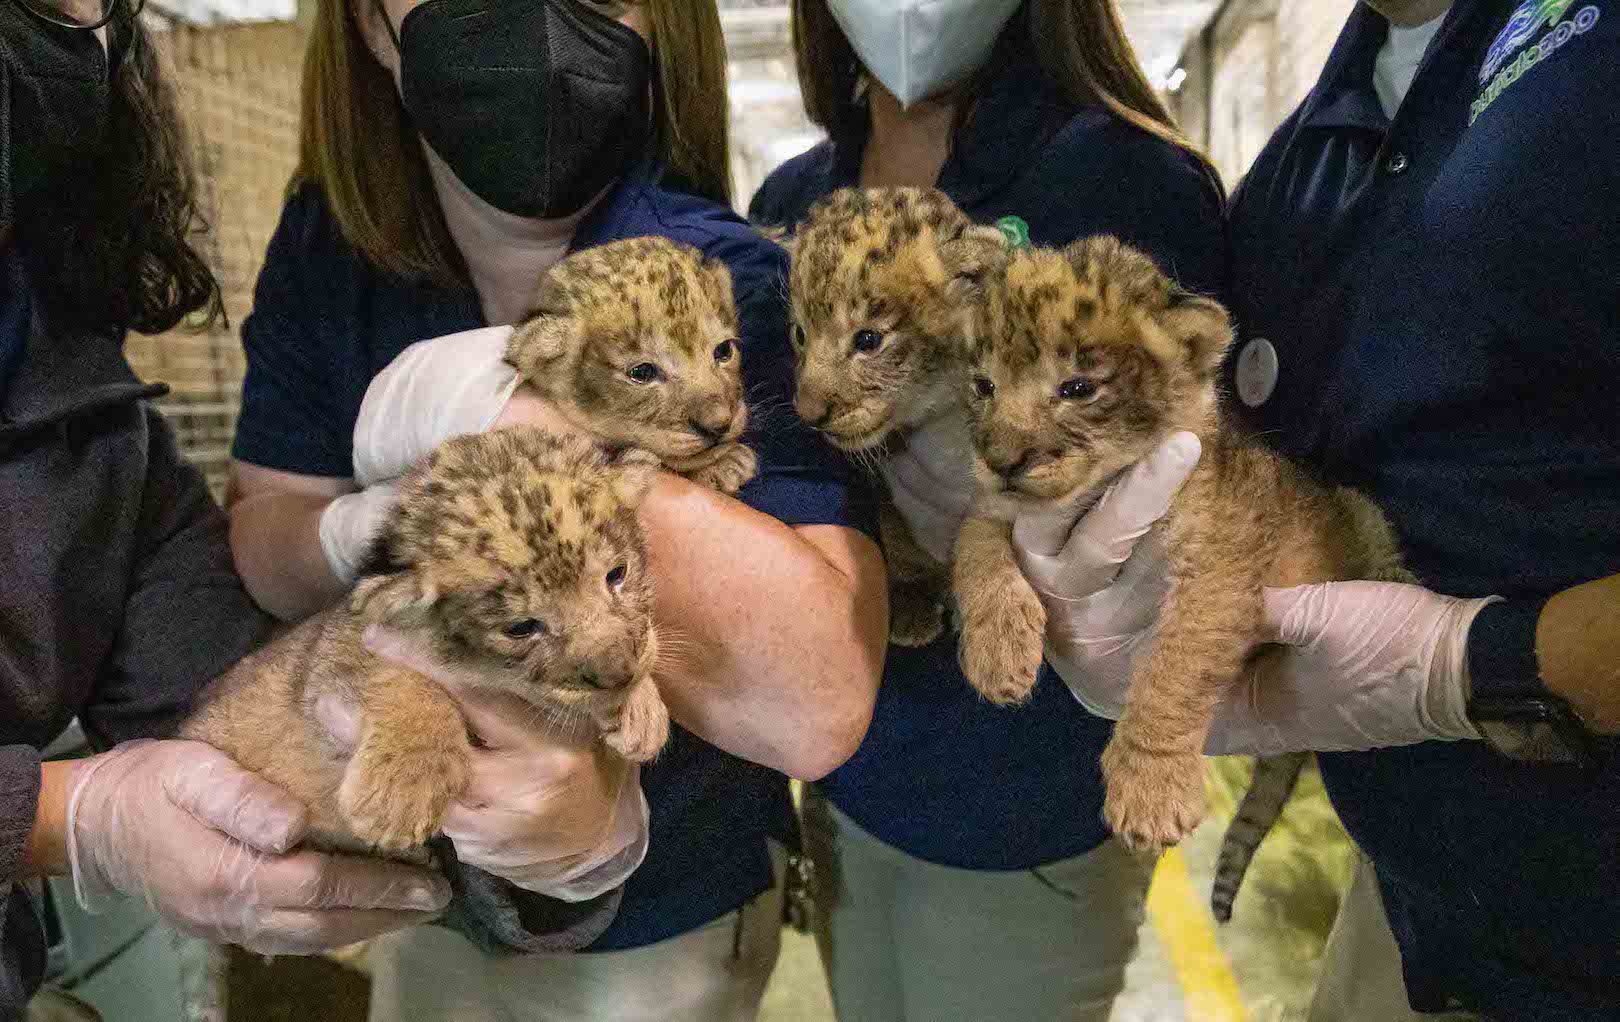 Lion cub images courtesy of the Buffalo Zoo